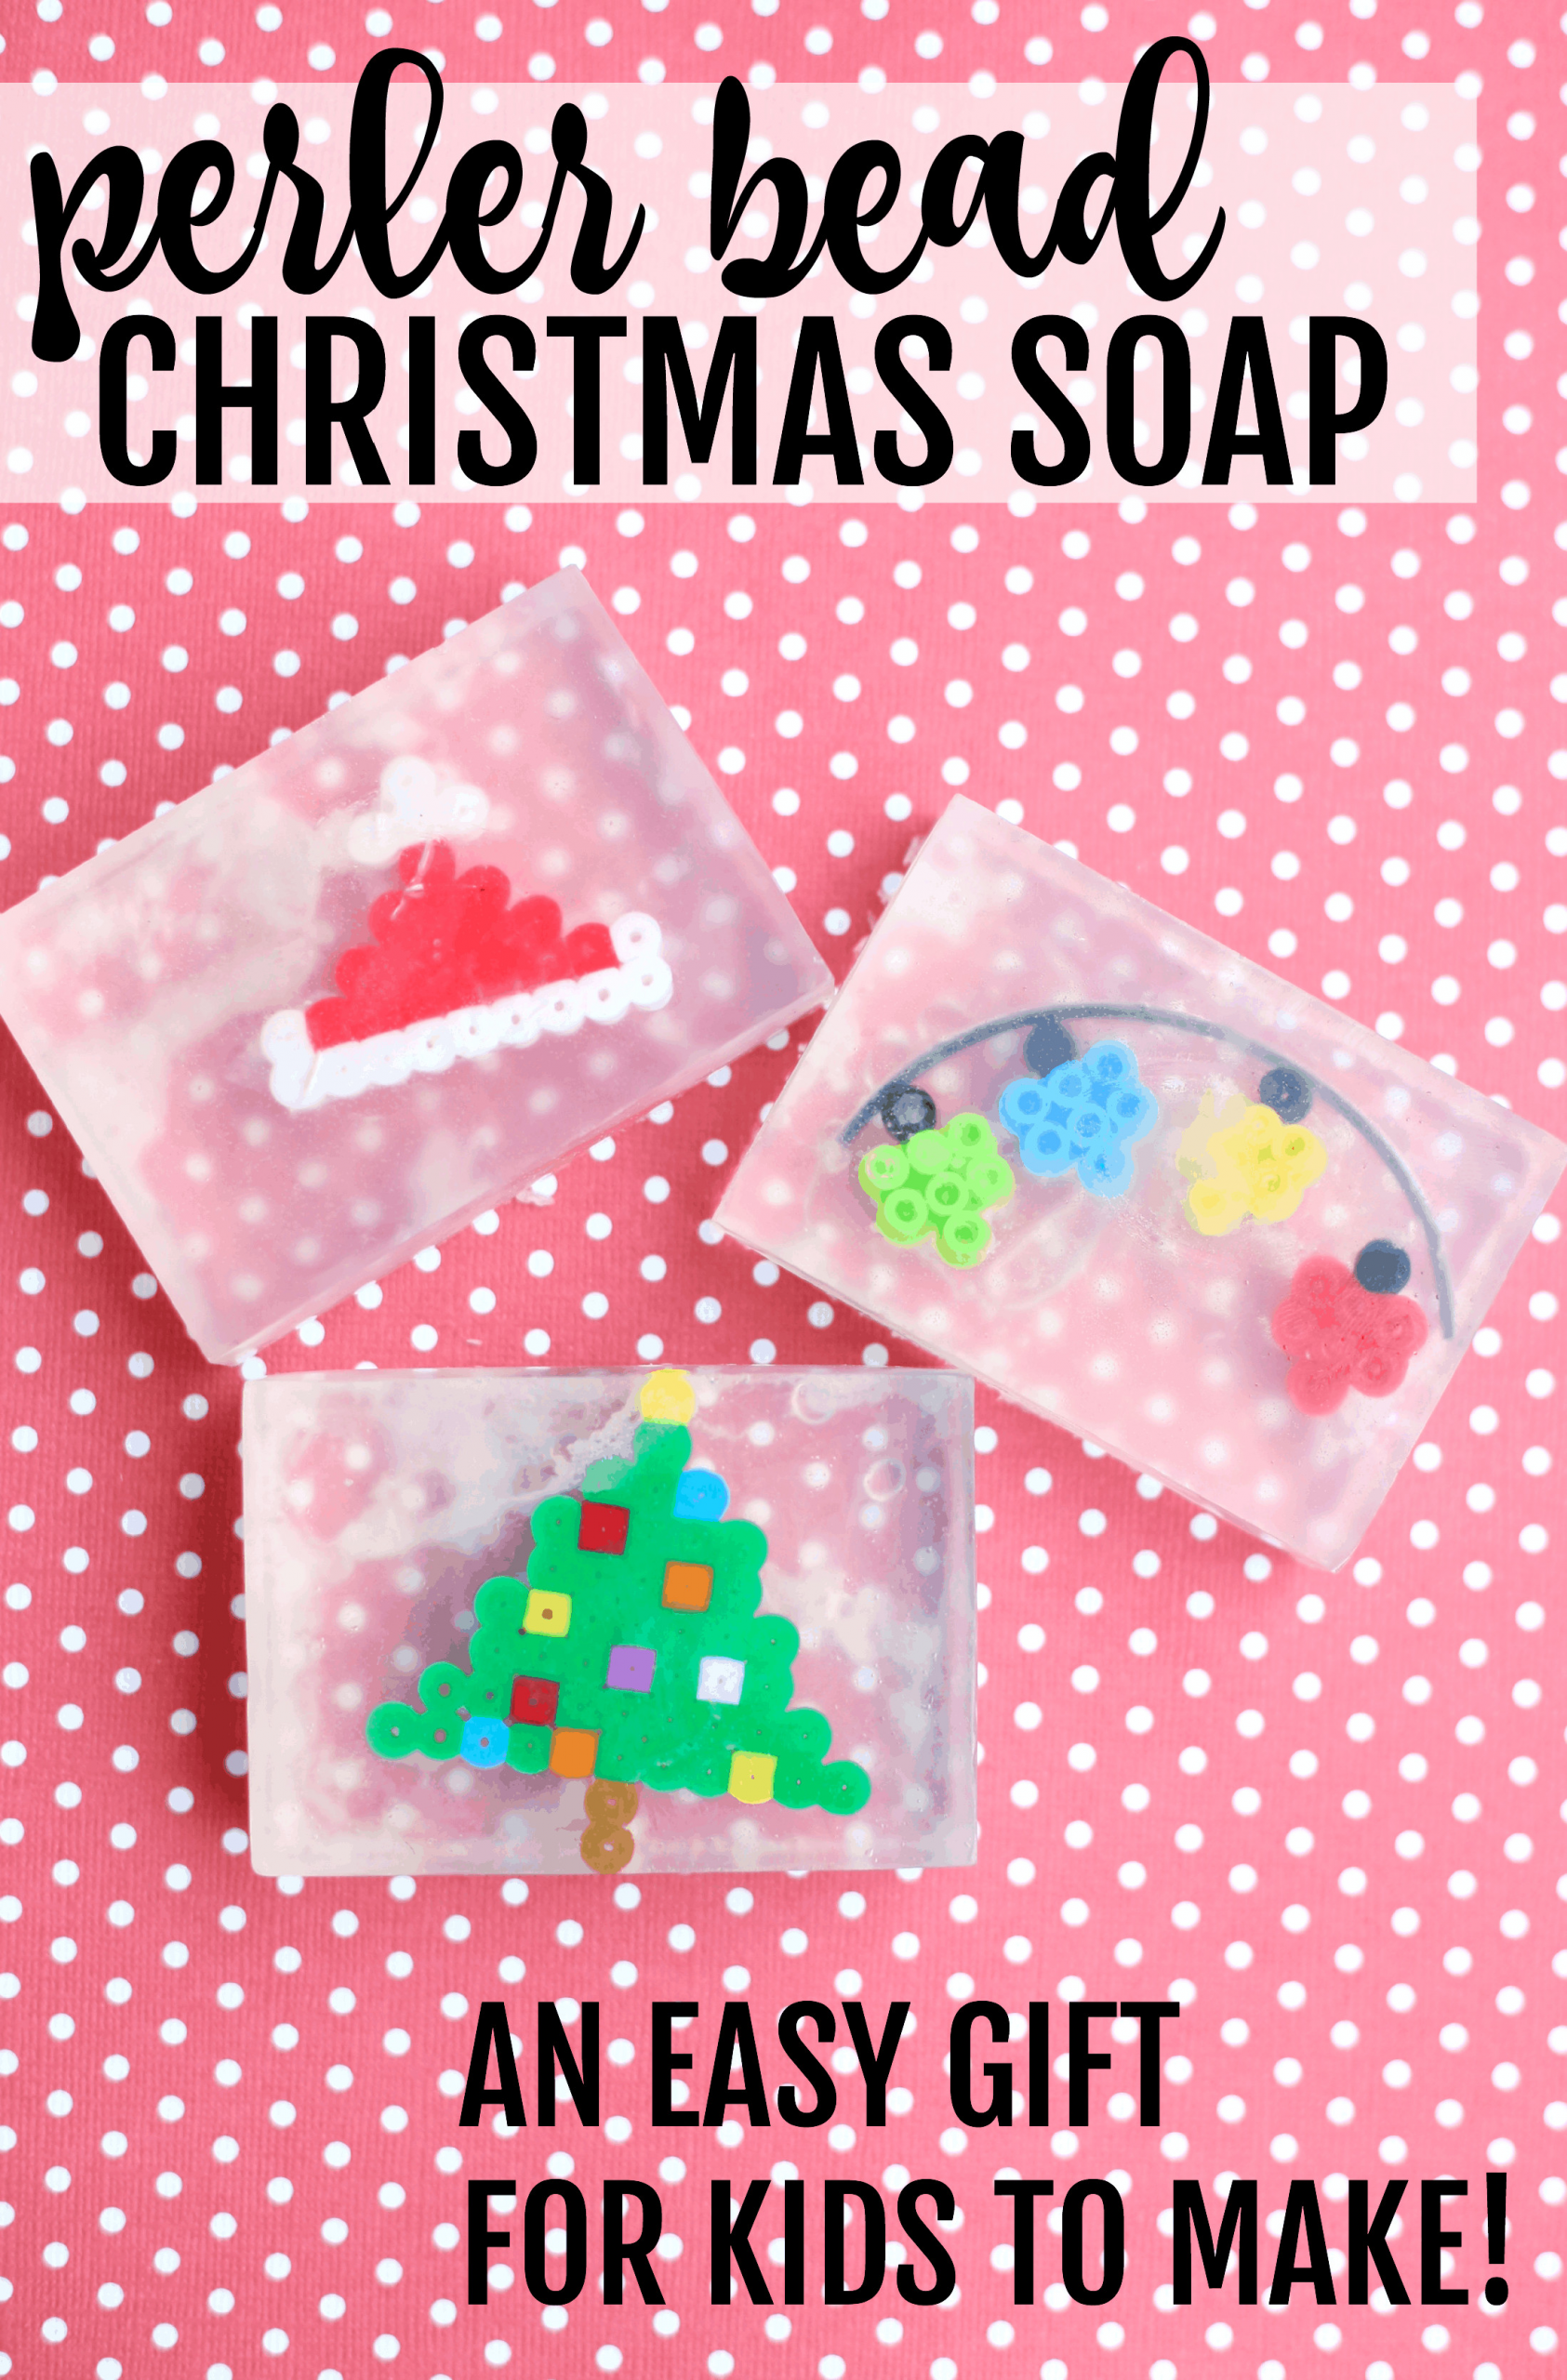 Easy Christmas Gifts For Kids To Make
 Perler Bead Christmas Soap Easy Gift for Kids to Make I